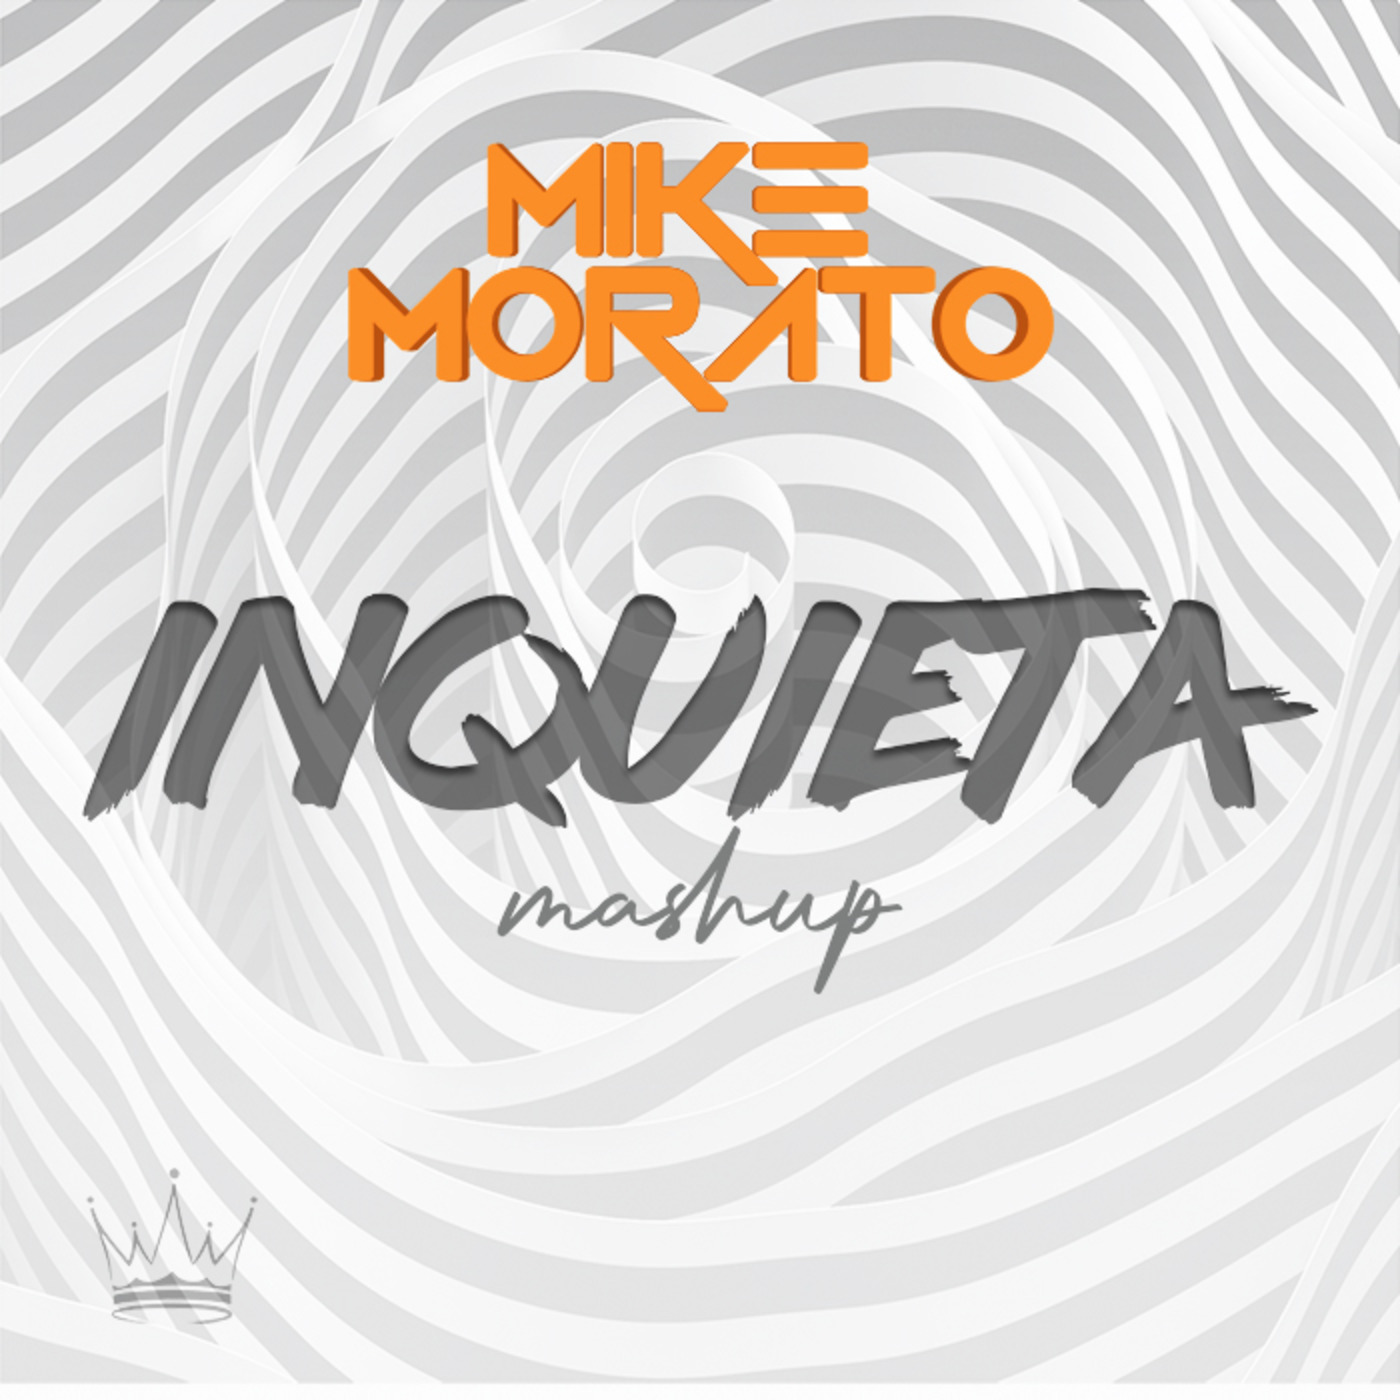 Mike Morato - Inquieta (Mashup)